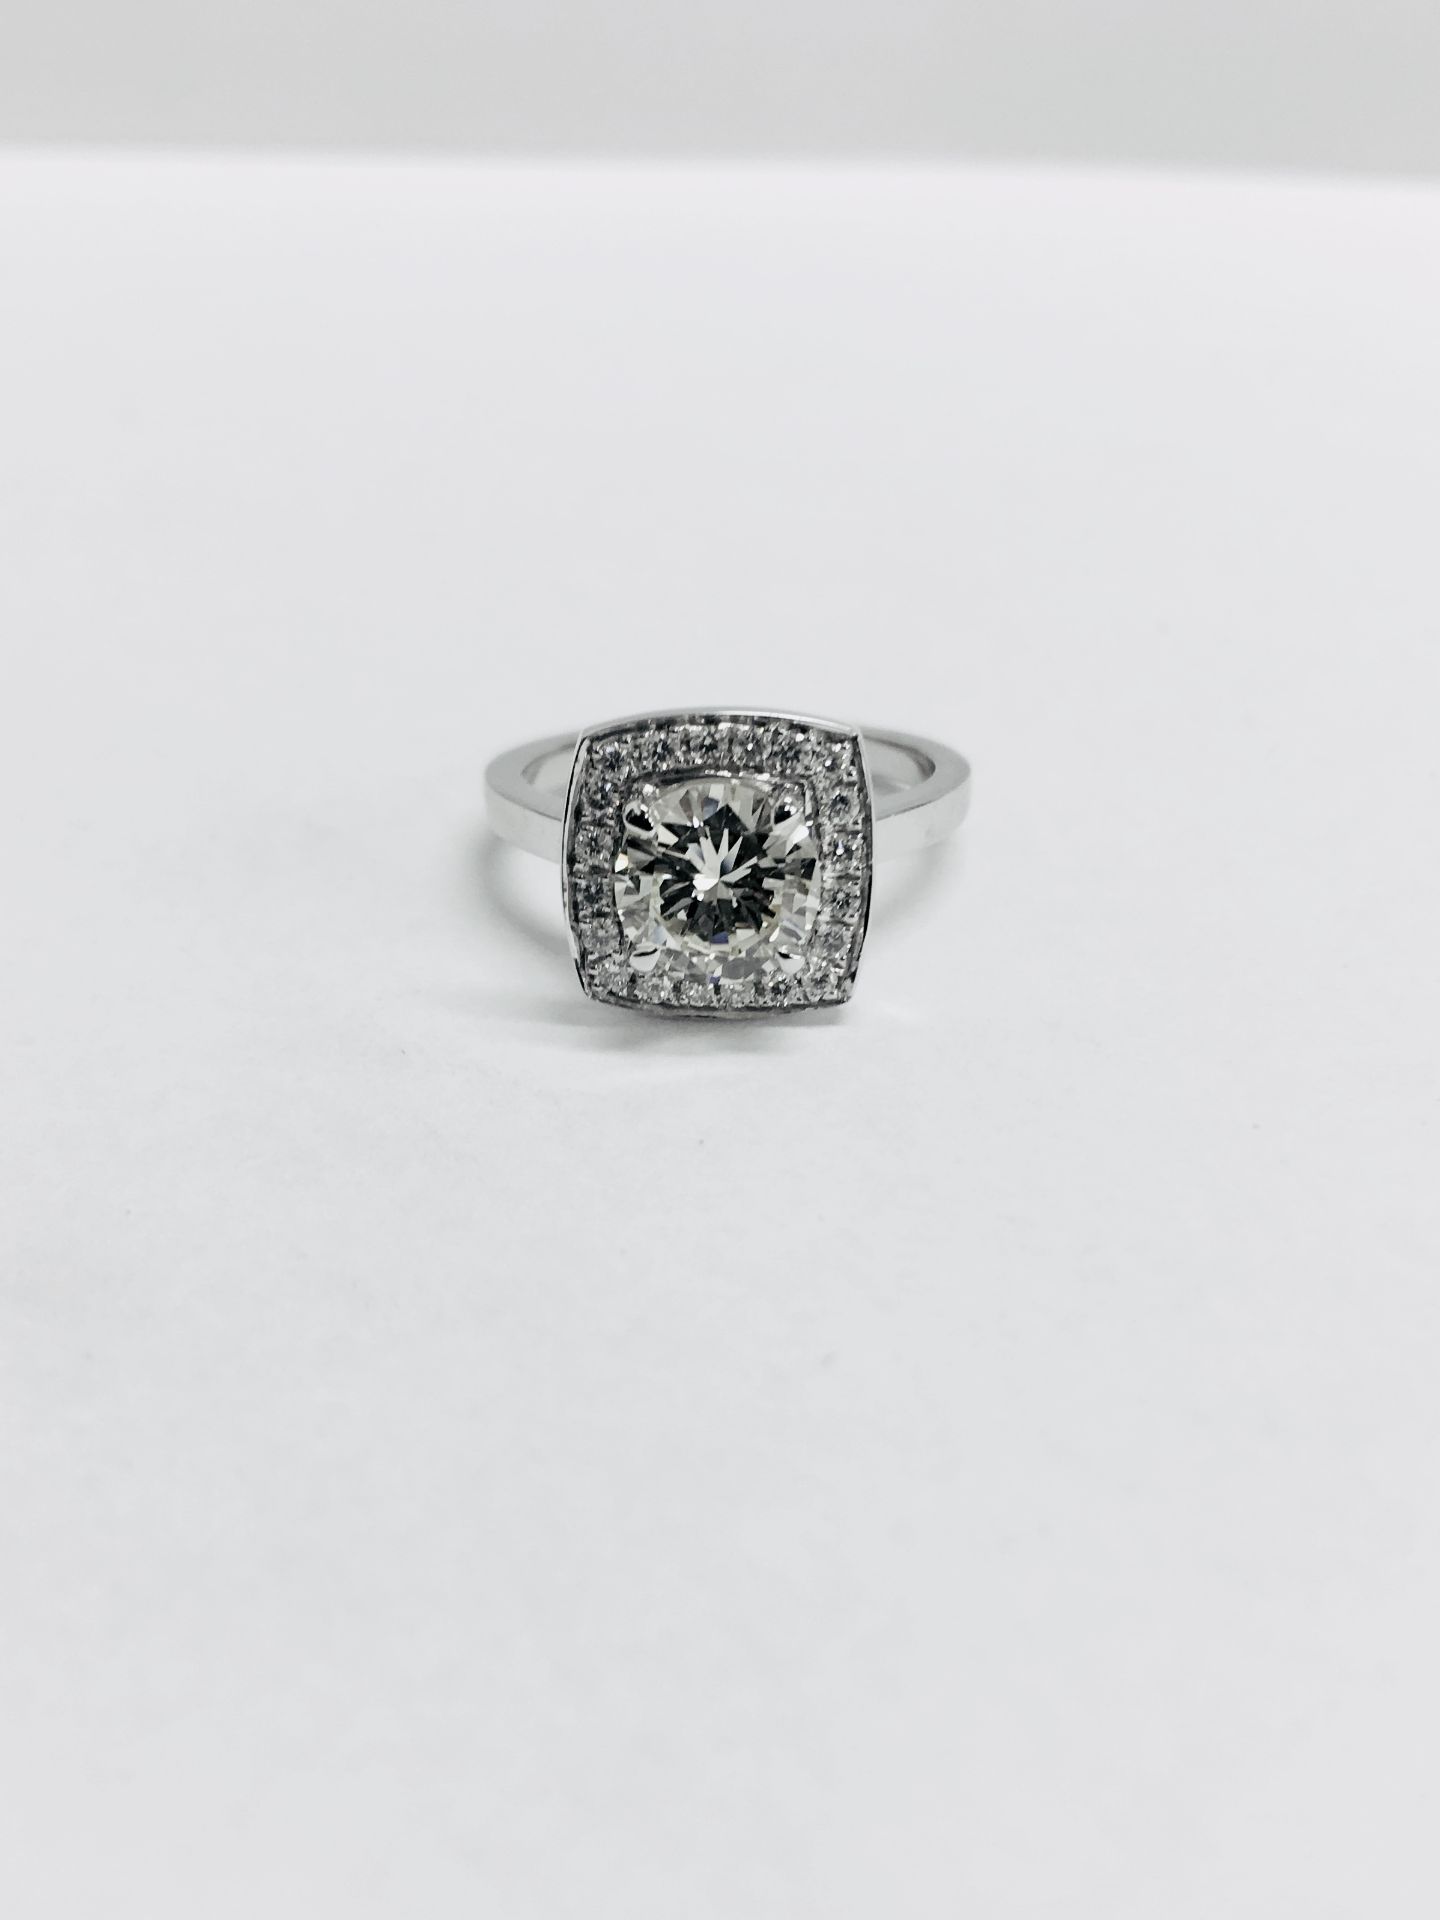 18ct white gold Handmade Halo style ring,0.50ct vs grade h colour diamond(clarity enhanced)